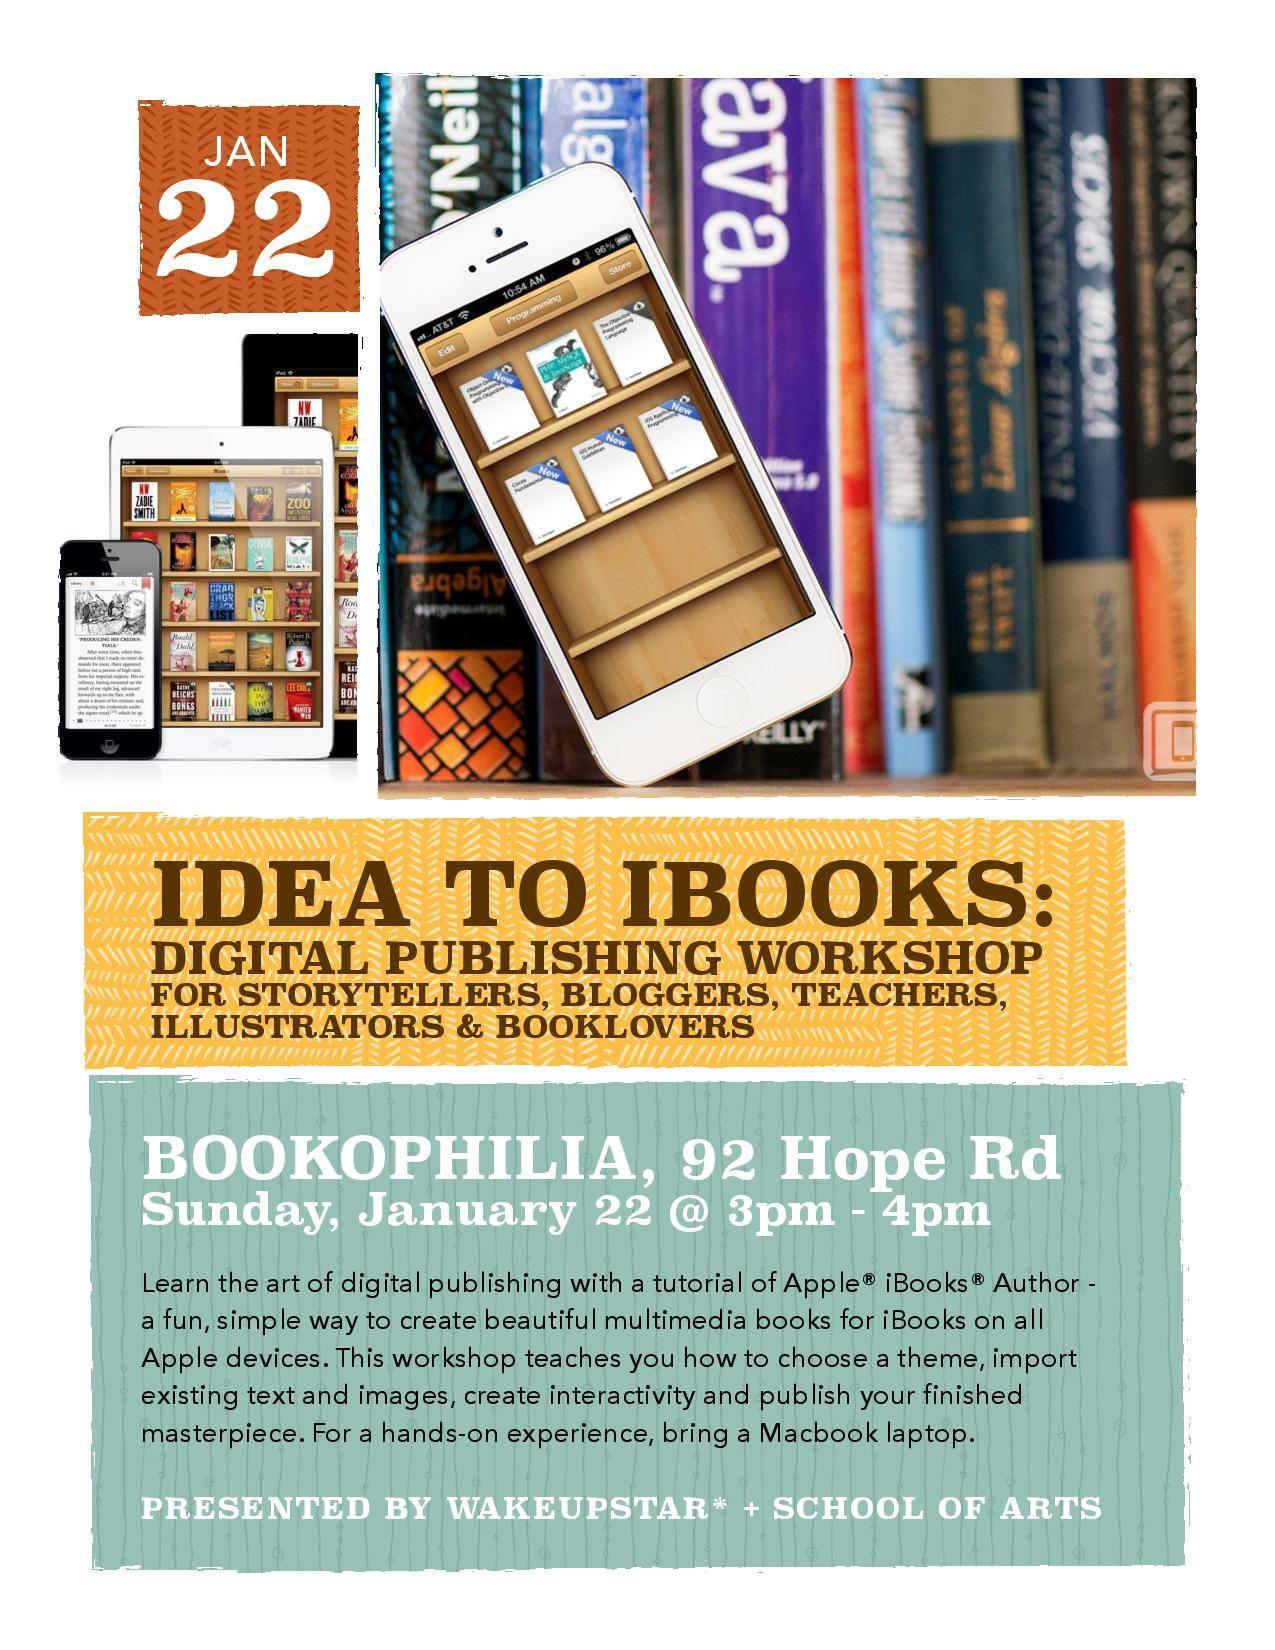 Idea to iBooks: Digital Publishing Workshop + Conversations